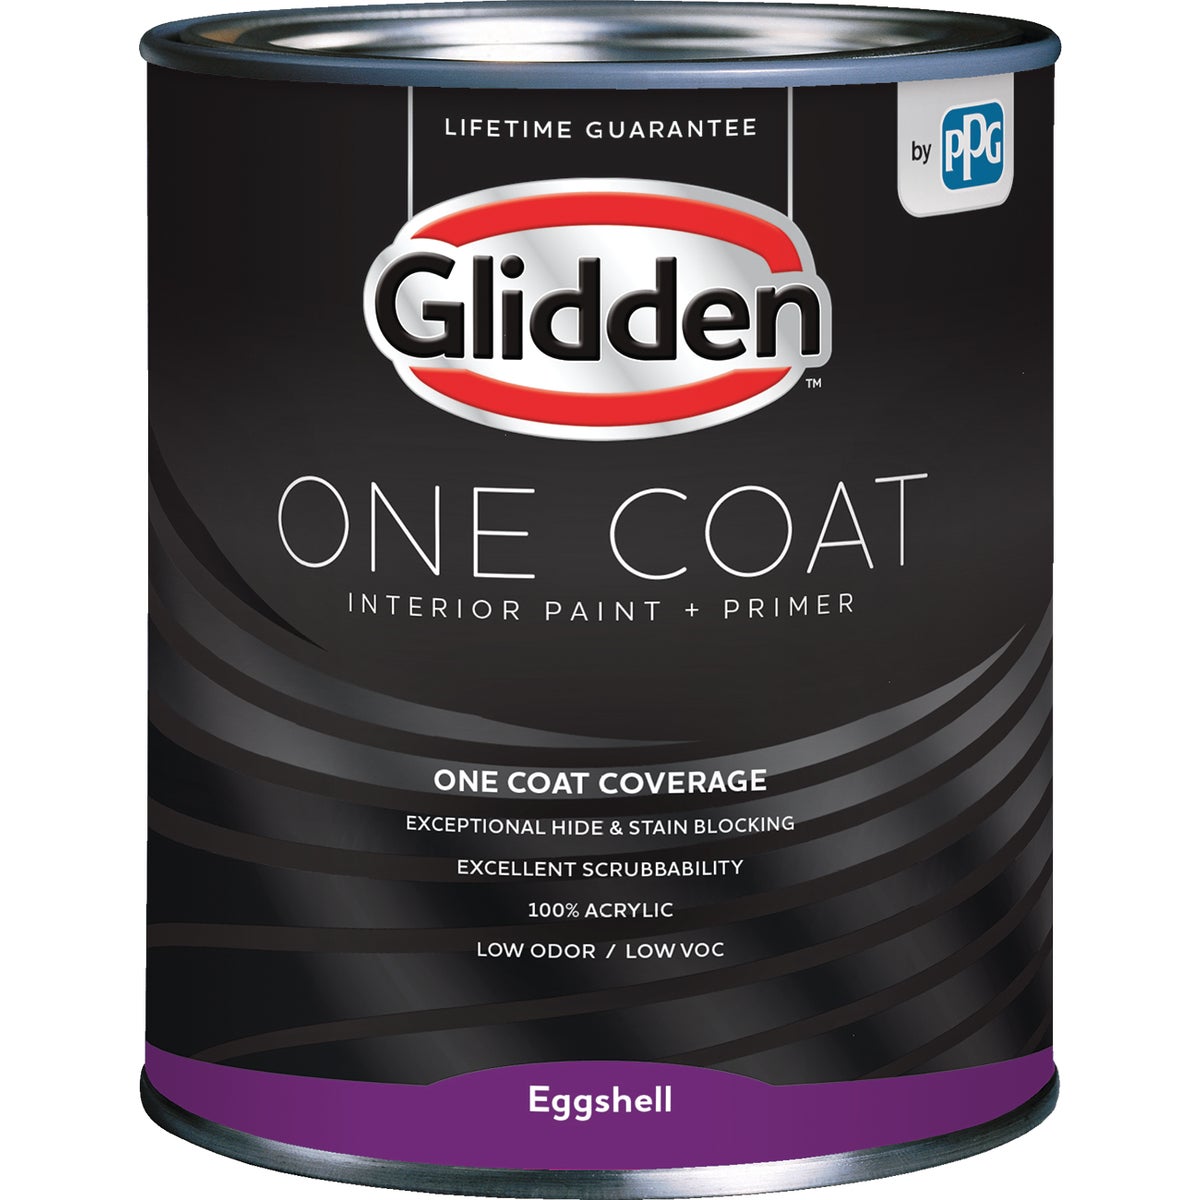 Glidden One Coat Interior Paint + Primer Eggshell White & Pastel Base Quart